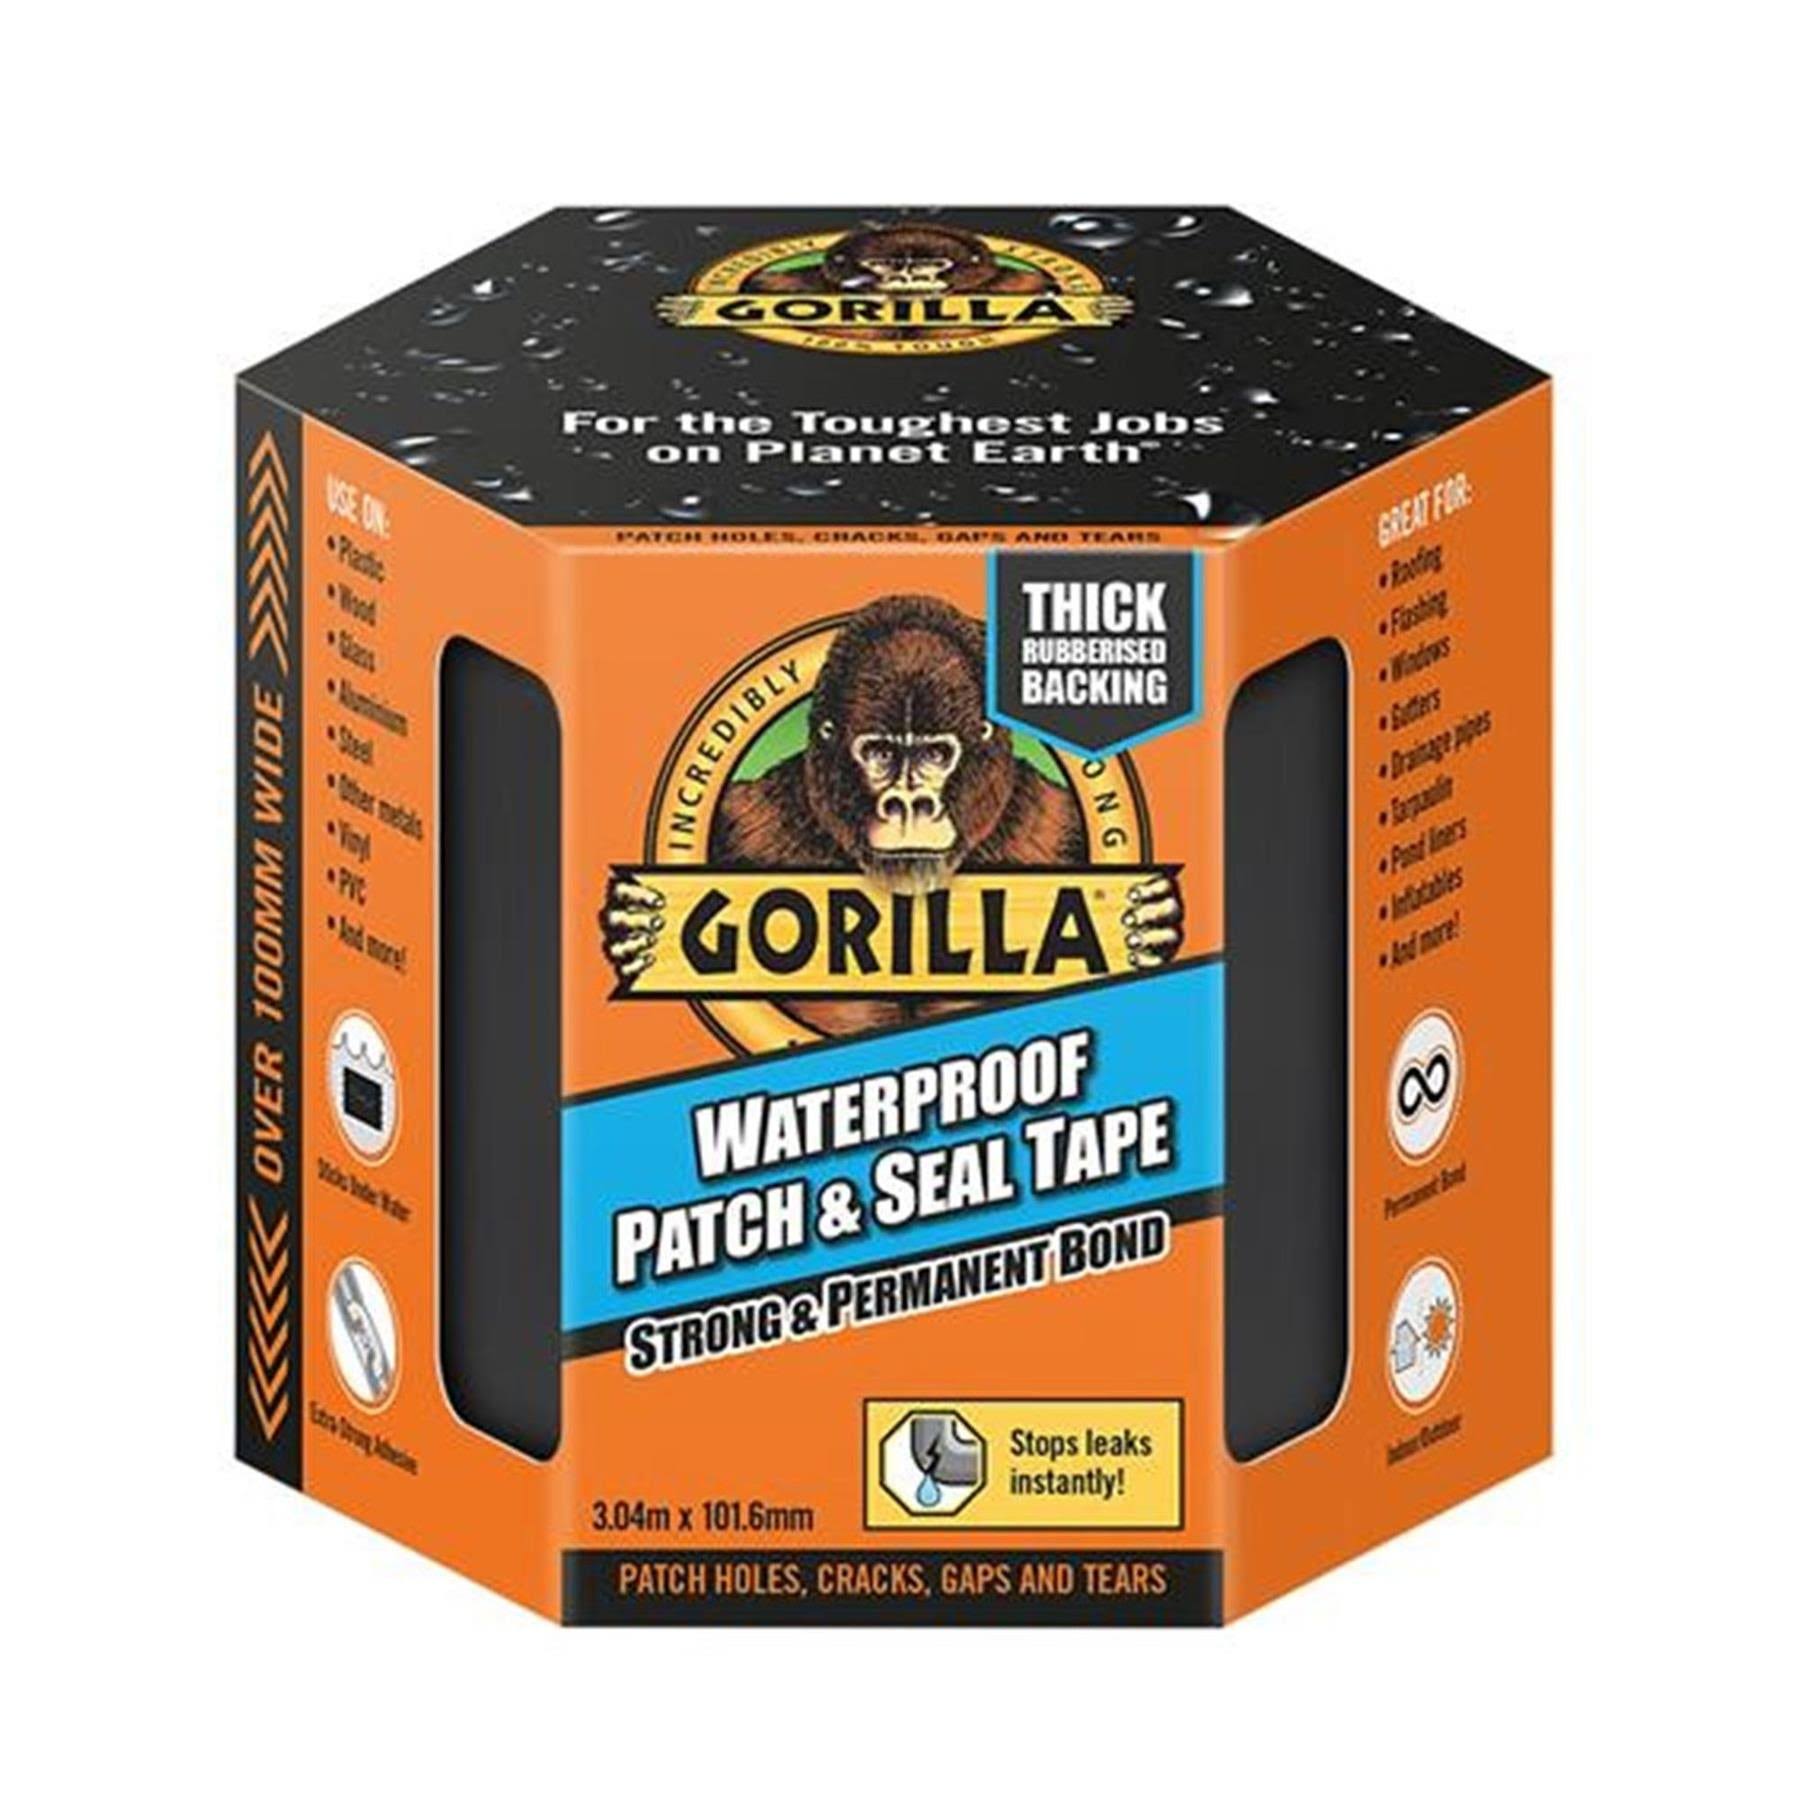 Gorilla Tape Waterproof Patch & Seal